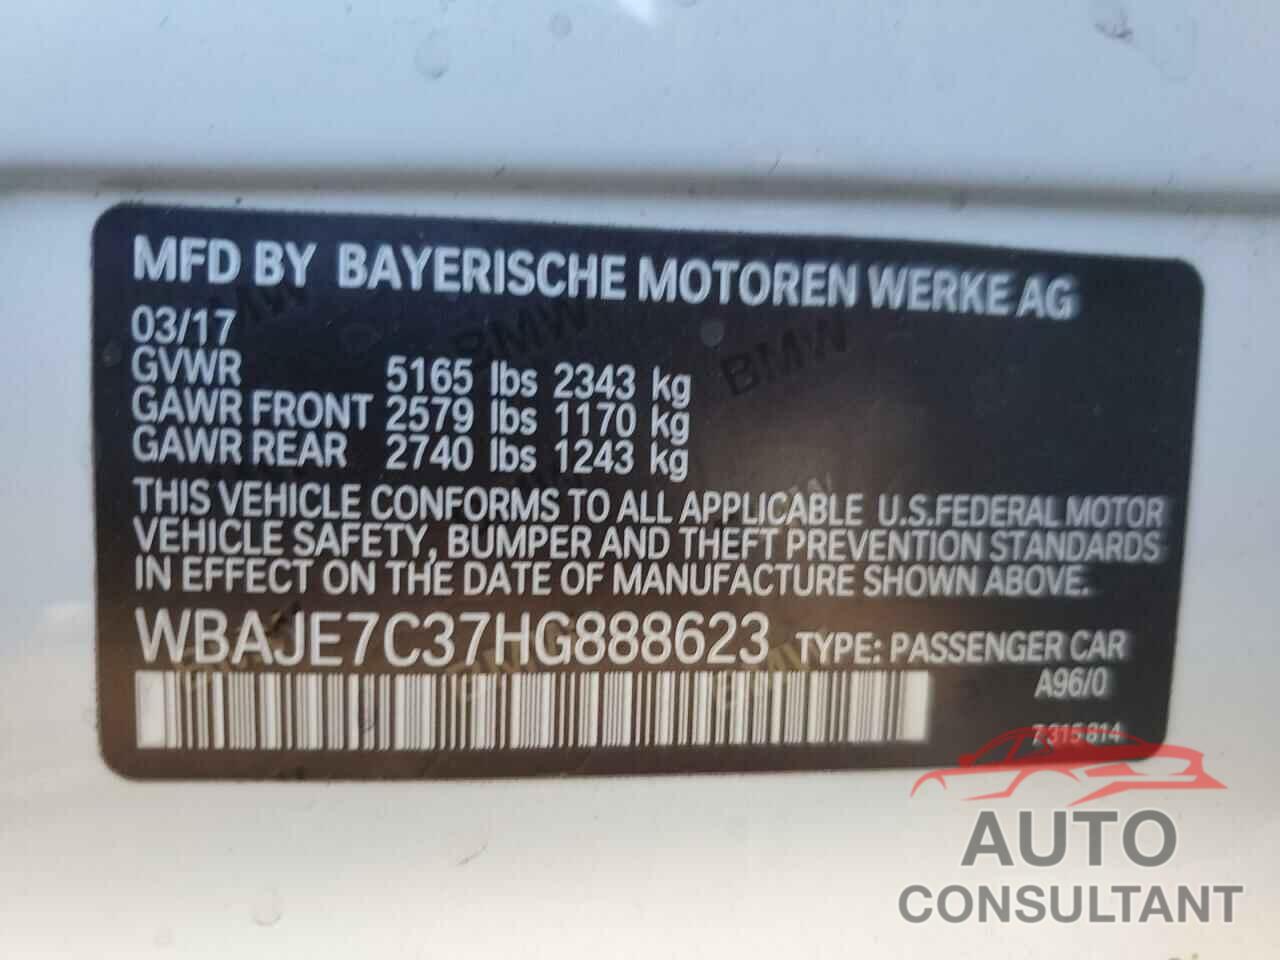 BMW 5 SERIES 2017 - WBAJE7C37HG888623